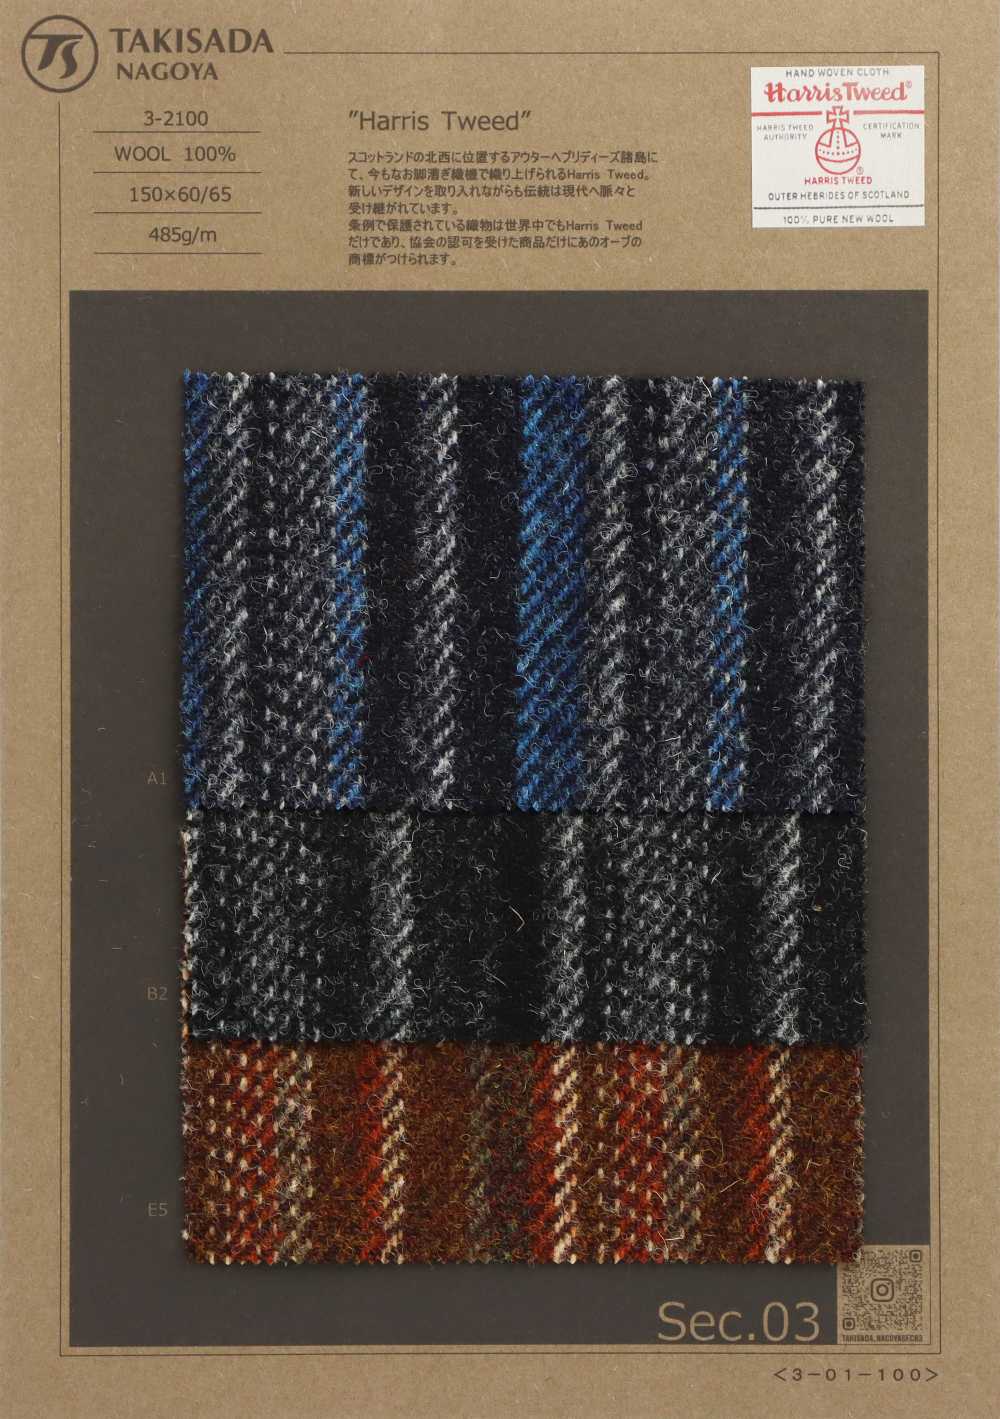 3-2100 HARRIS Harris Tweed Random Stripes[Textilgewebe] Takisada Nagoya